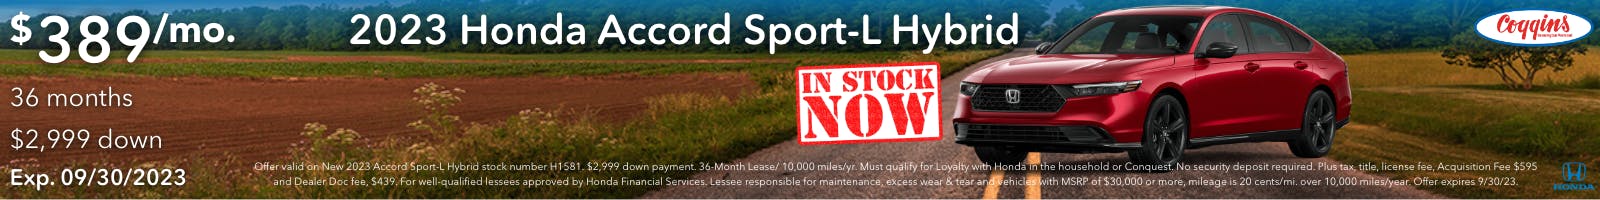 2023 Honda Accord Sport-L Hybrid